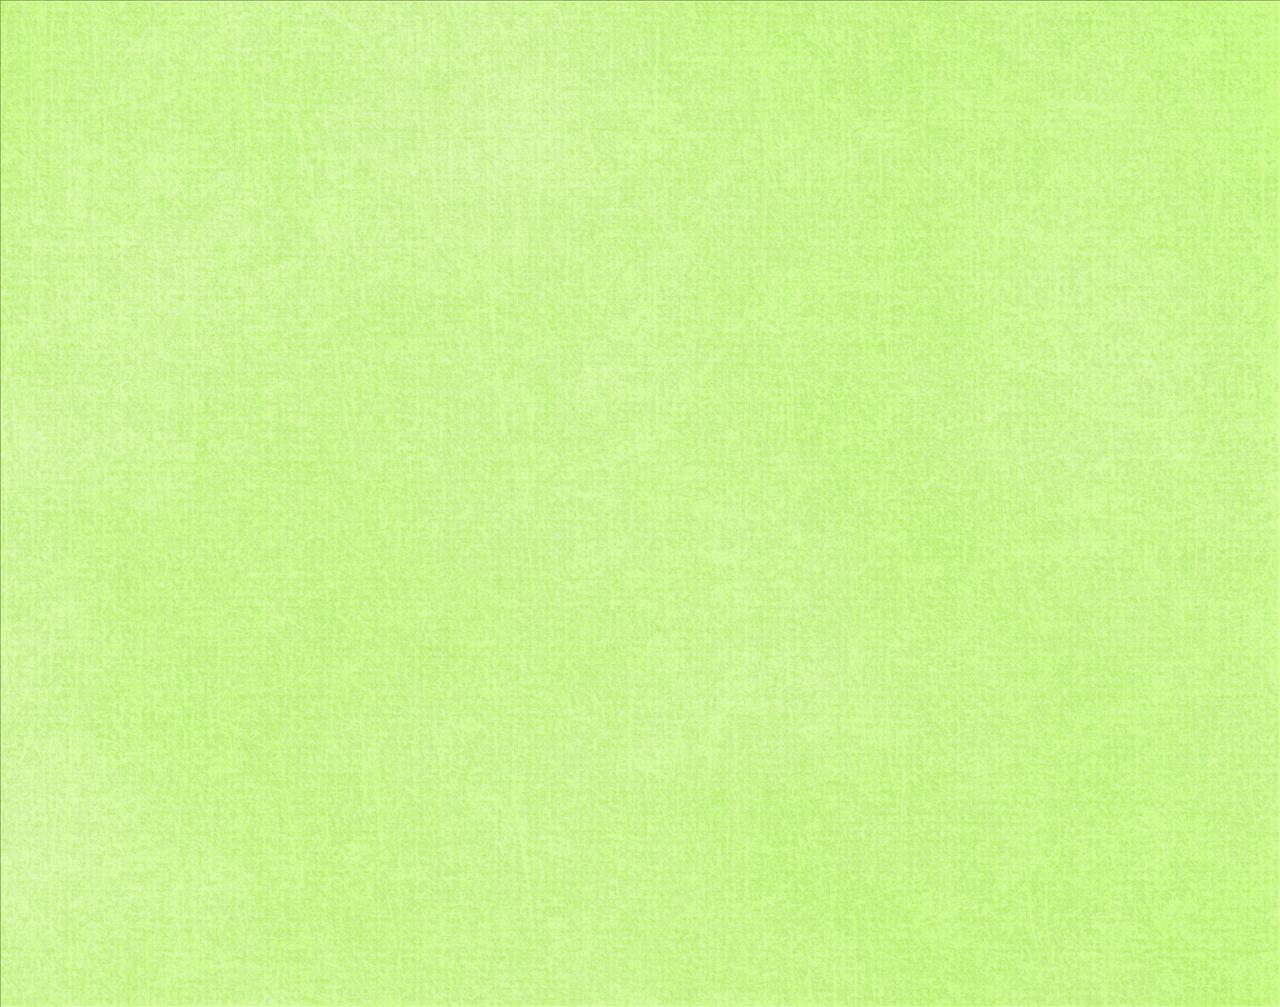 Green Pastel Background